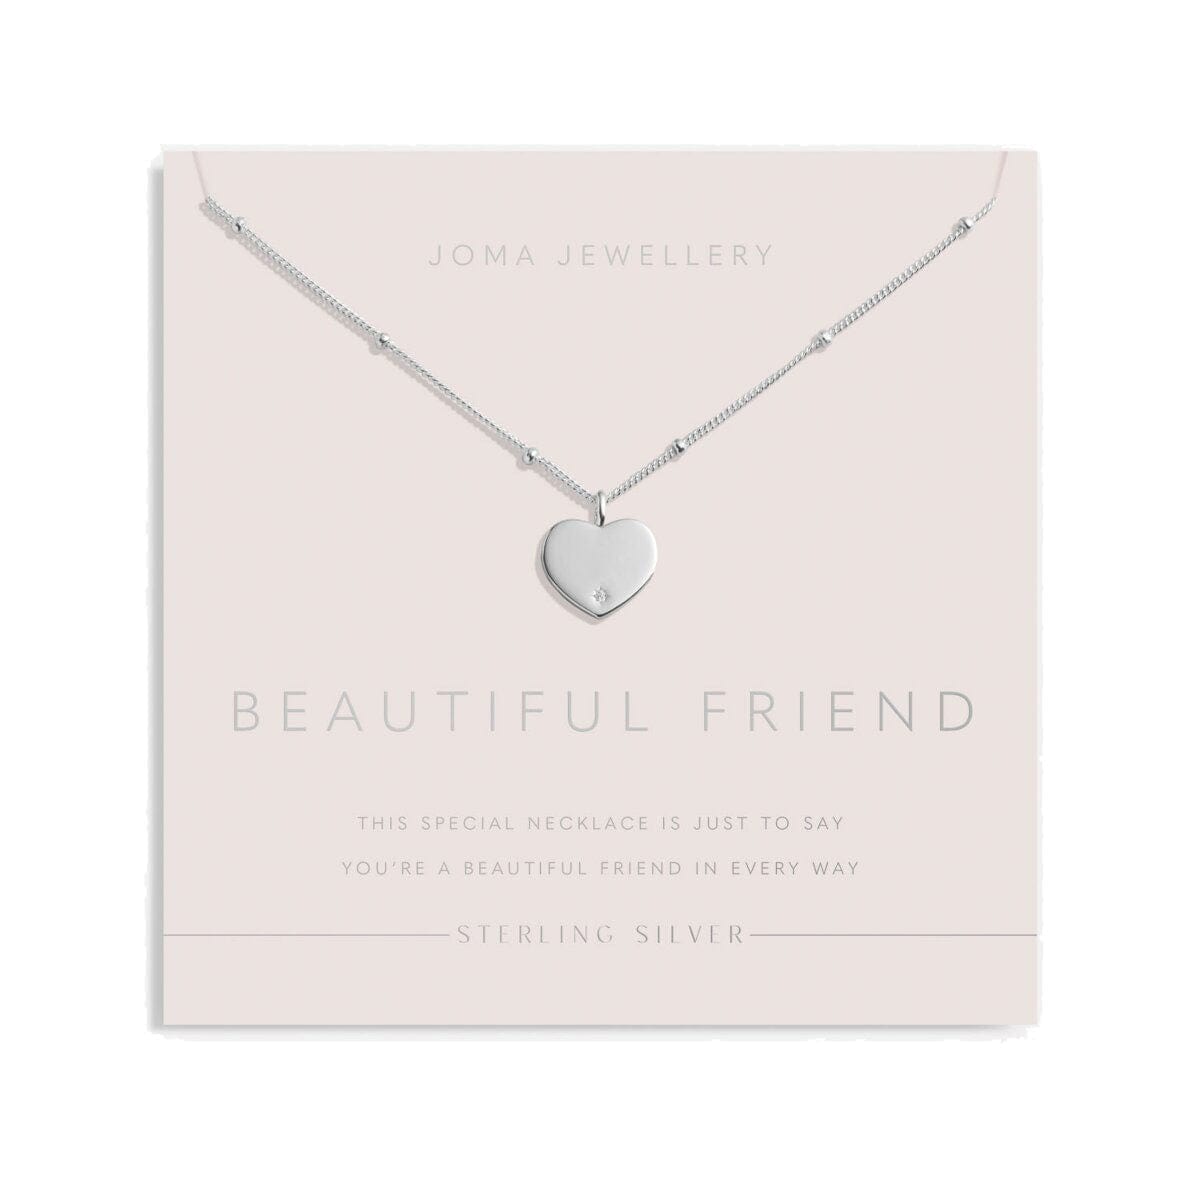 Joma Jewellery Necklace Joma Jewellery Sterling Silver Necklace - Beautiful Friend